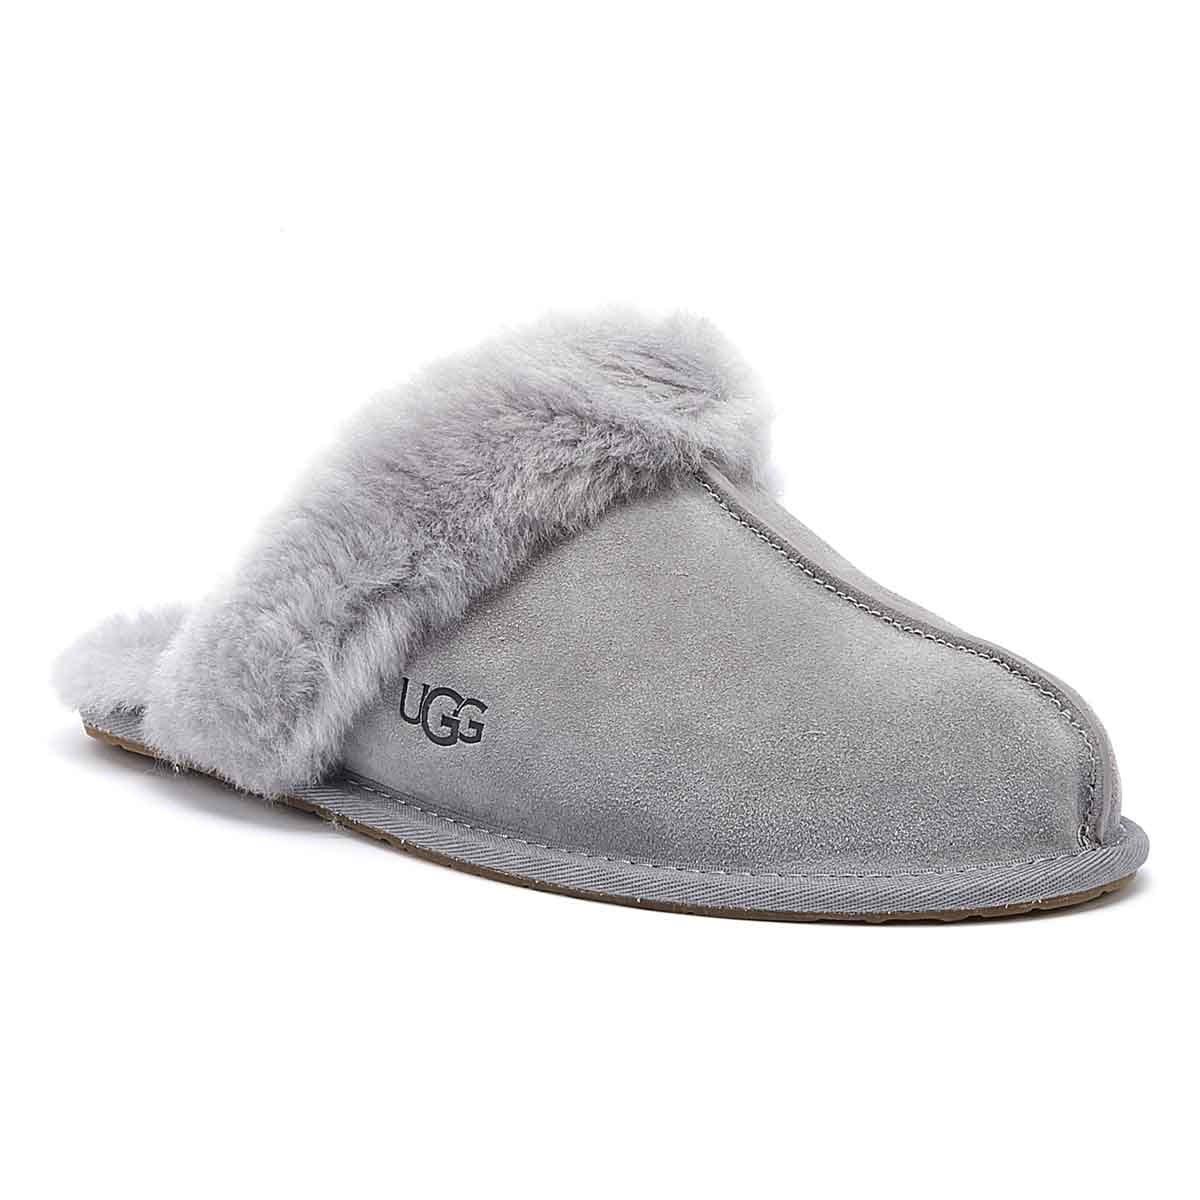 ugg light grey scuffette ii slippers